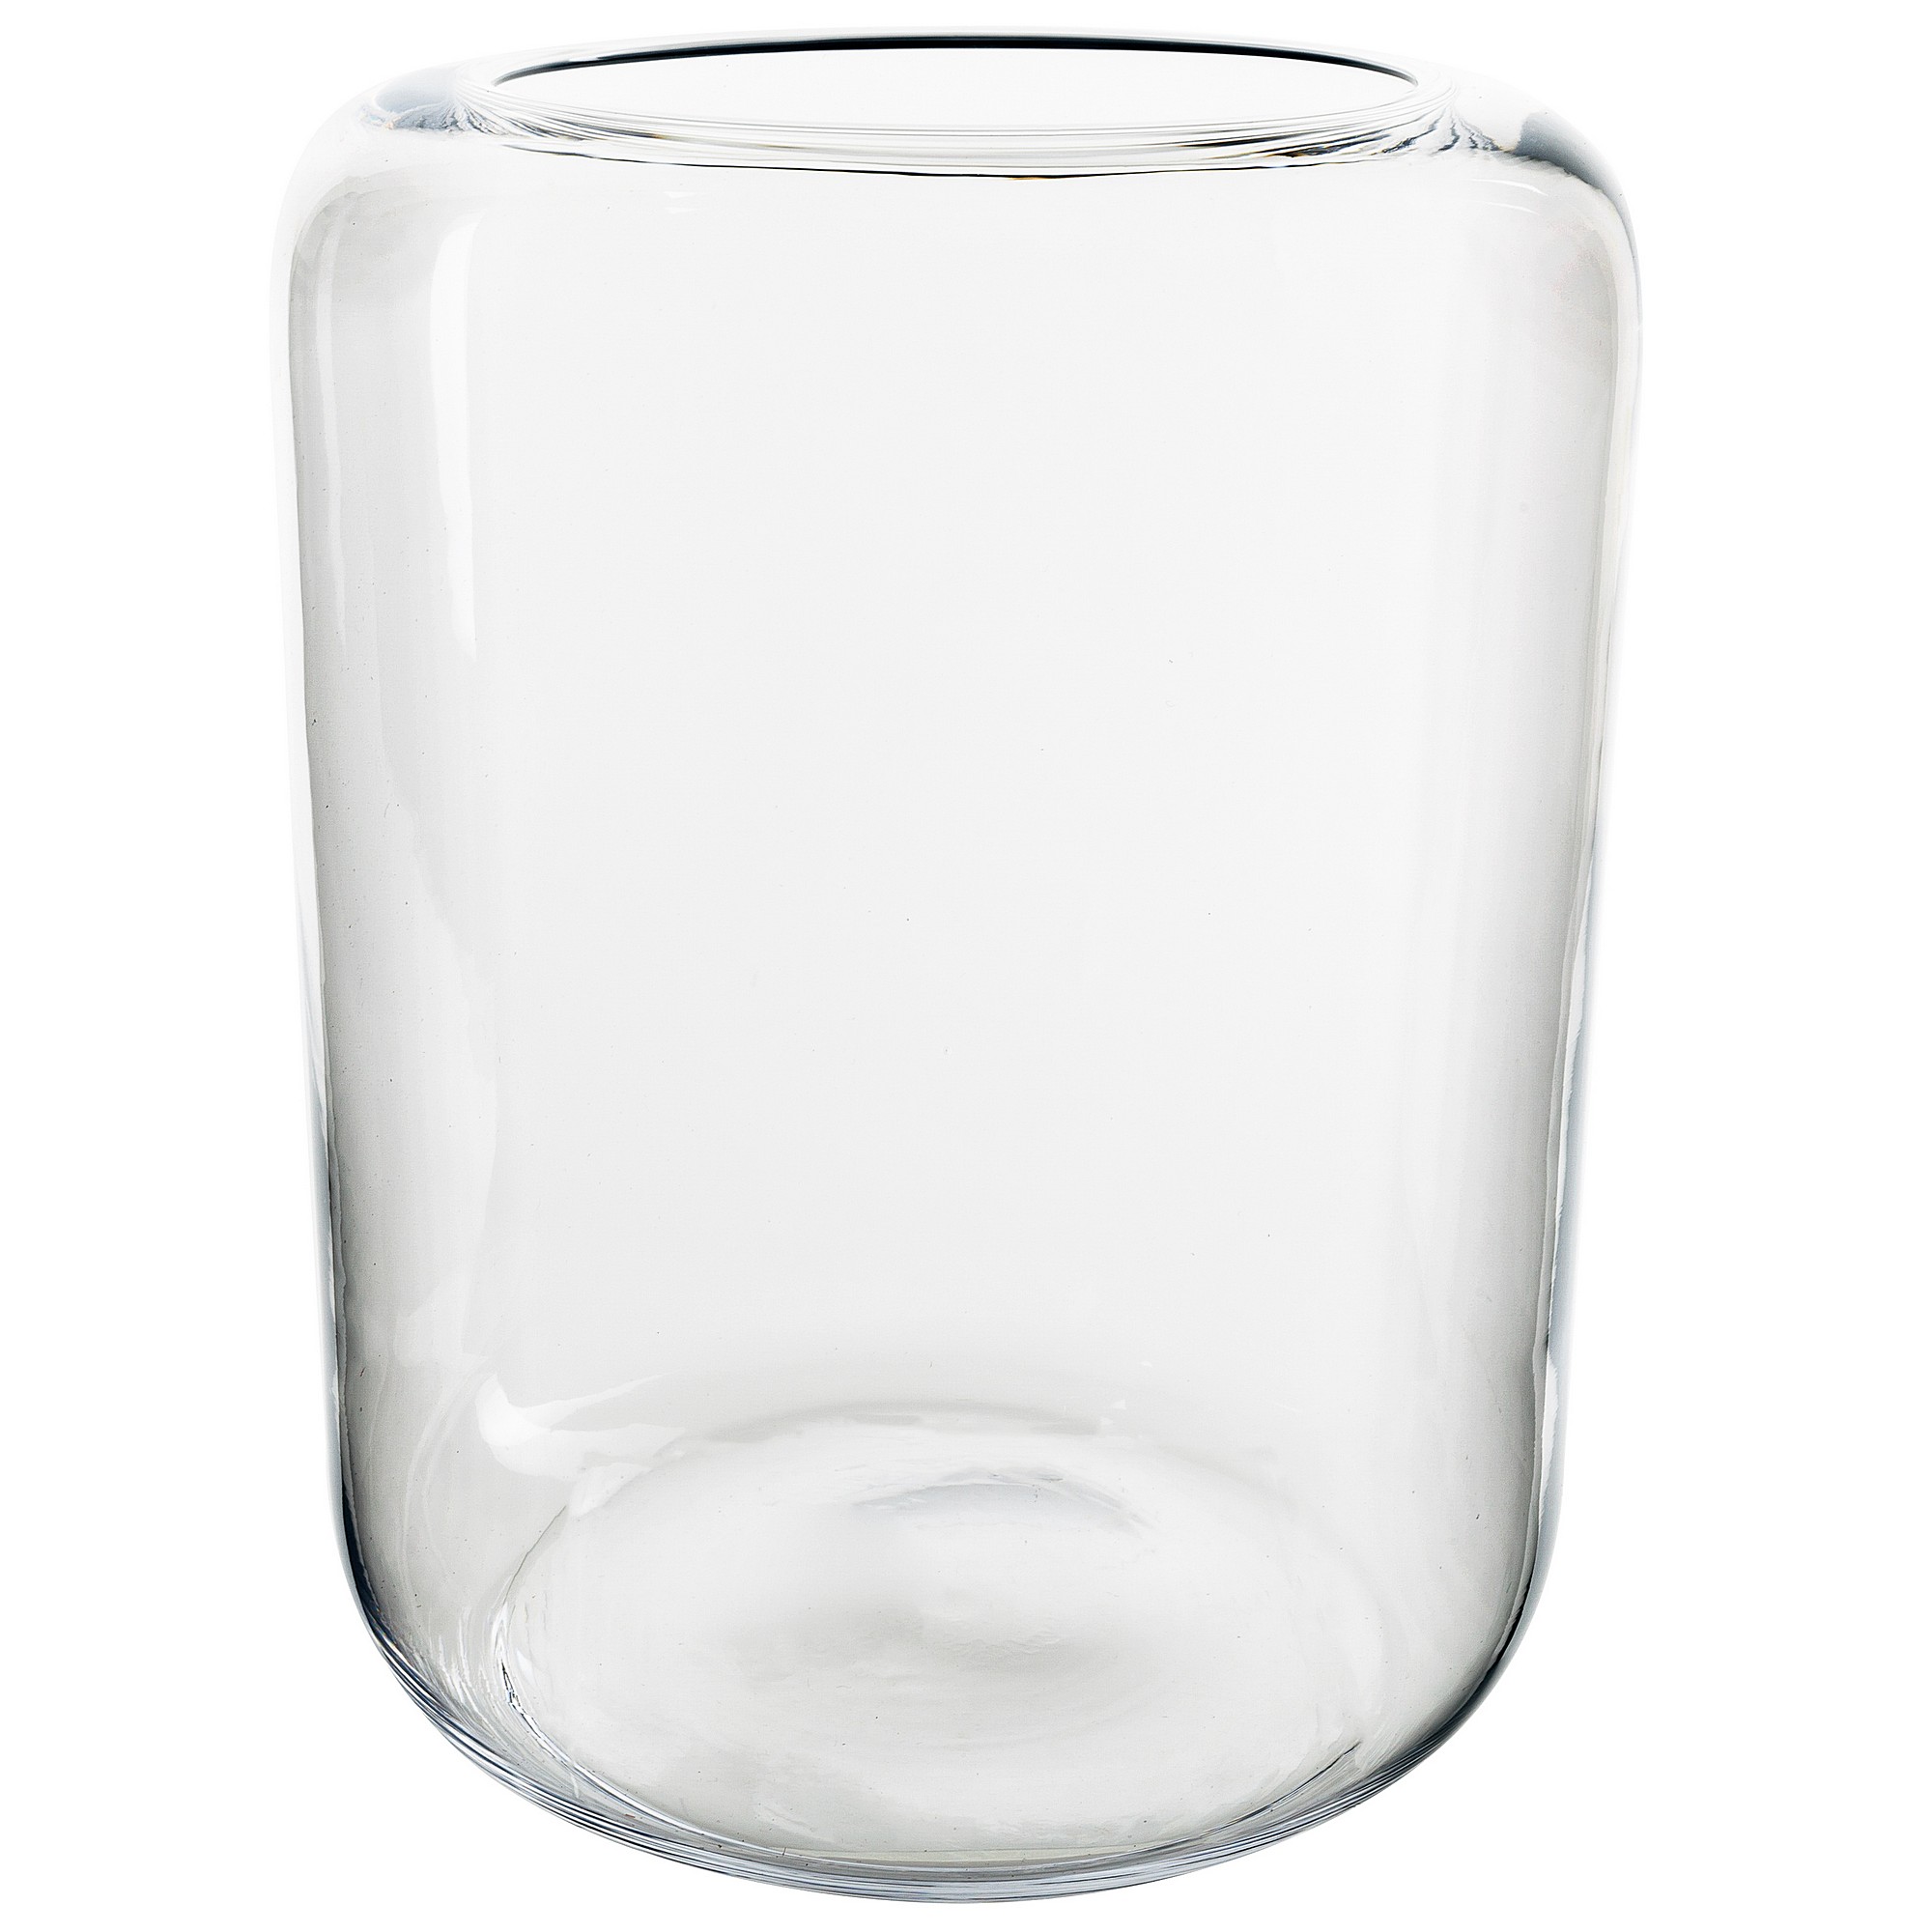 Ваза celeste Hackbijl glass 18230